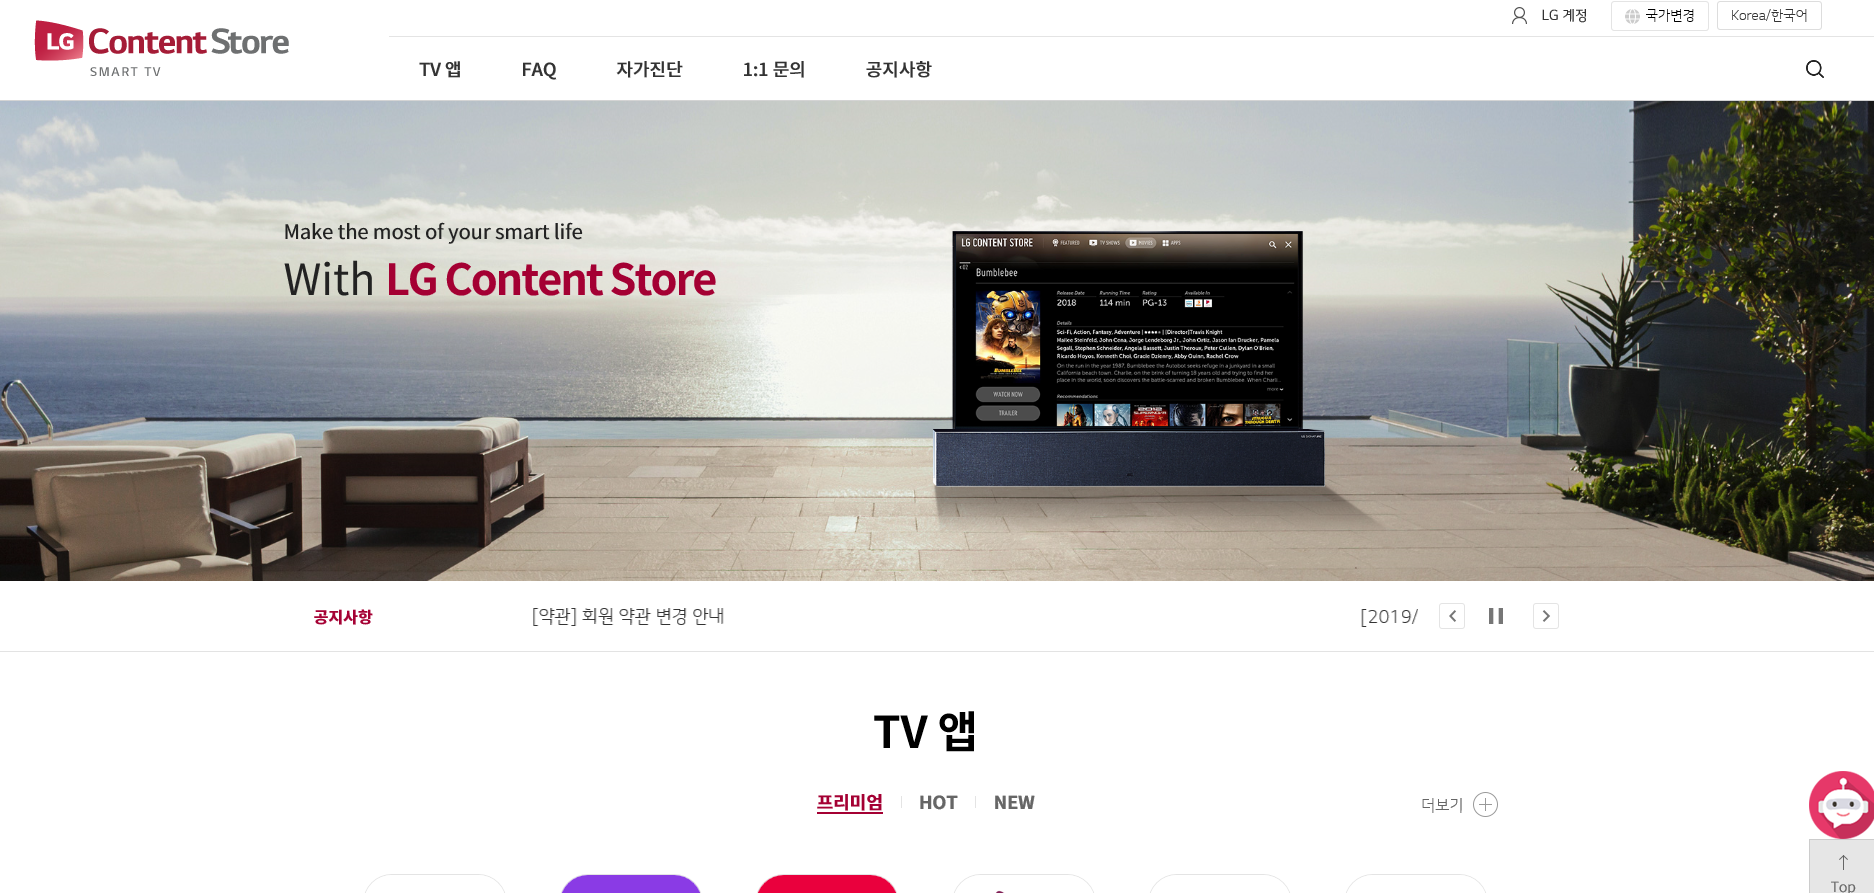 LG Content Store 대표​ 홈페이지 스크릿샷